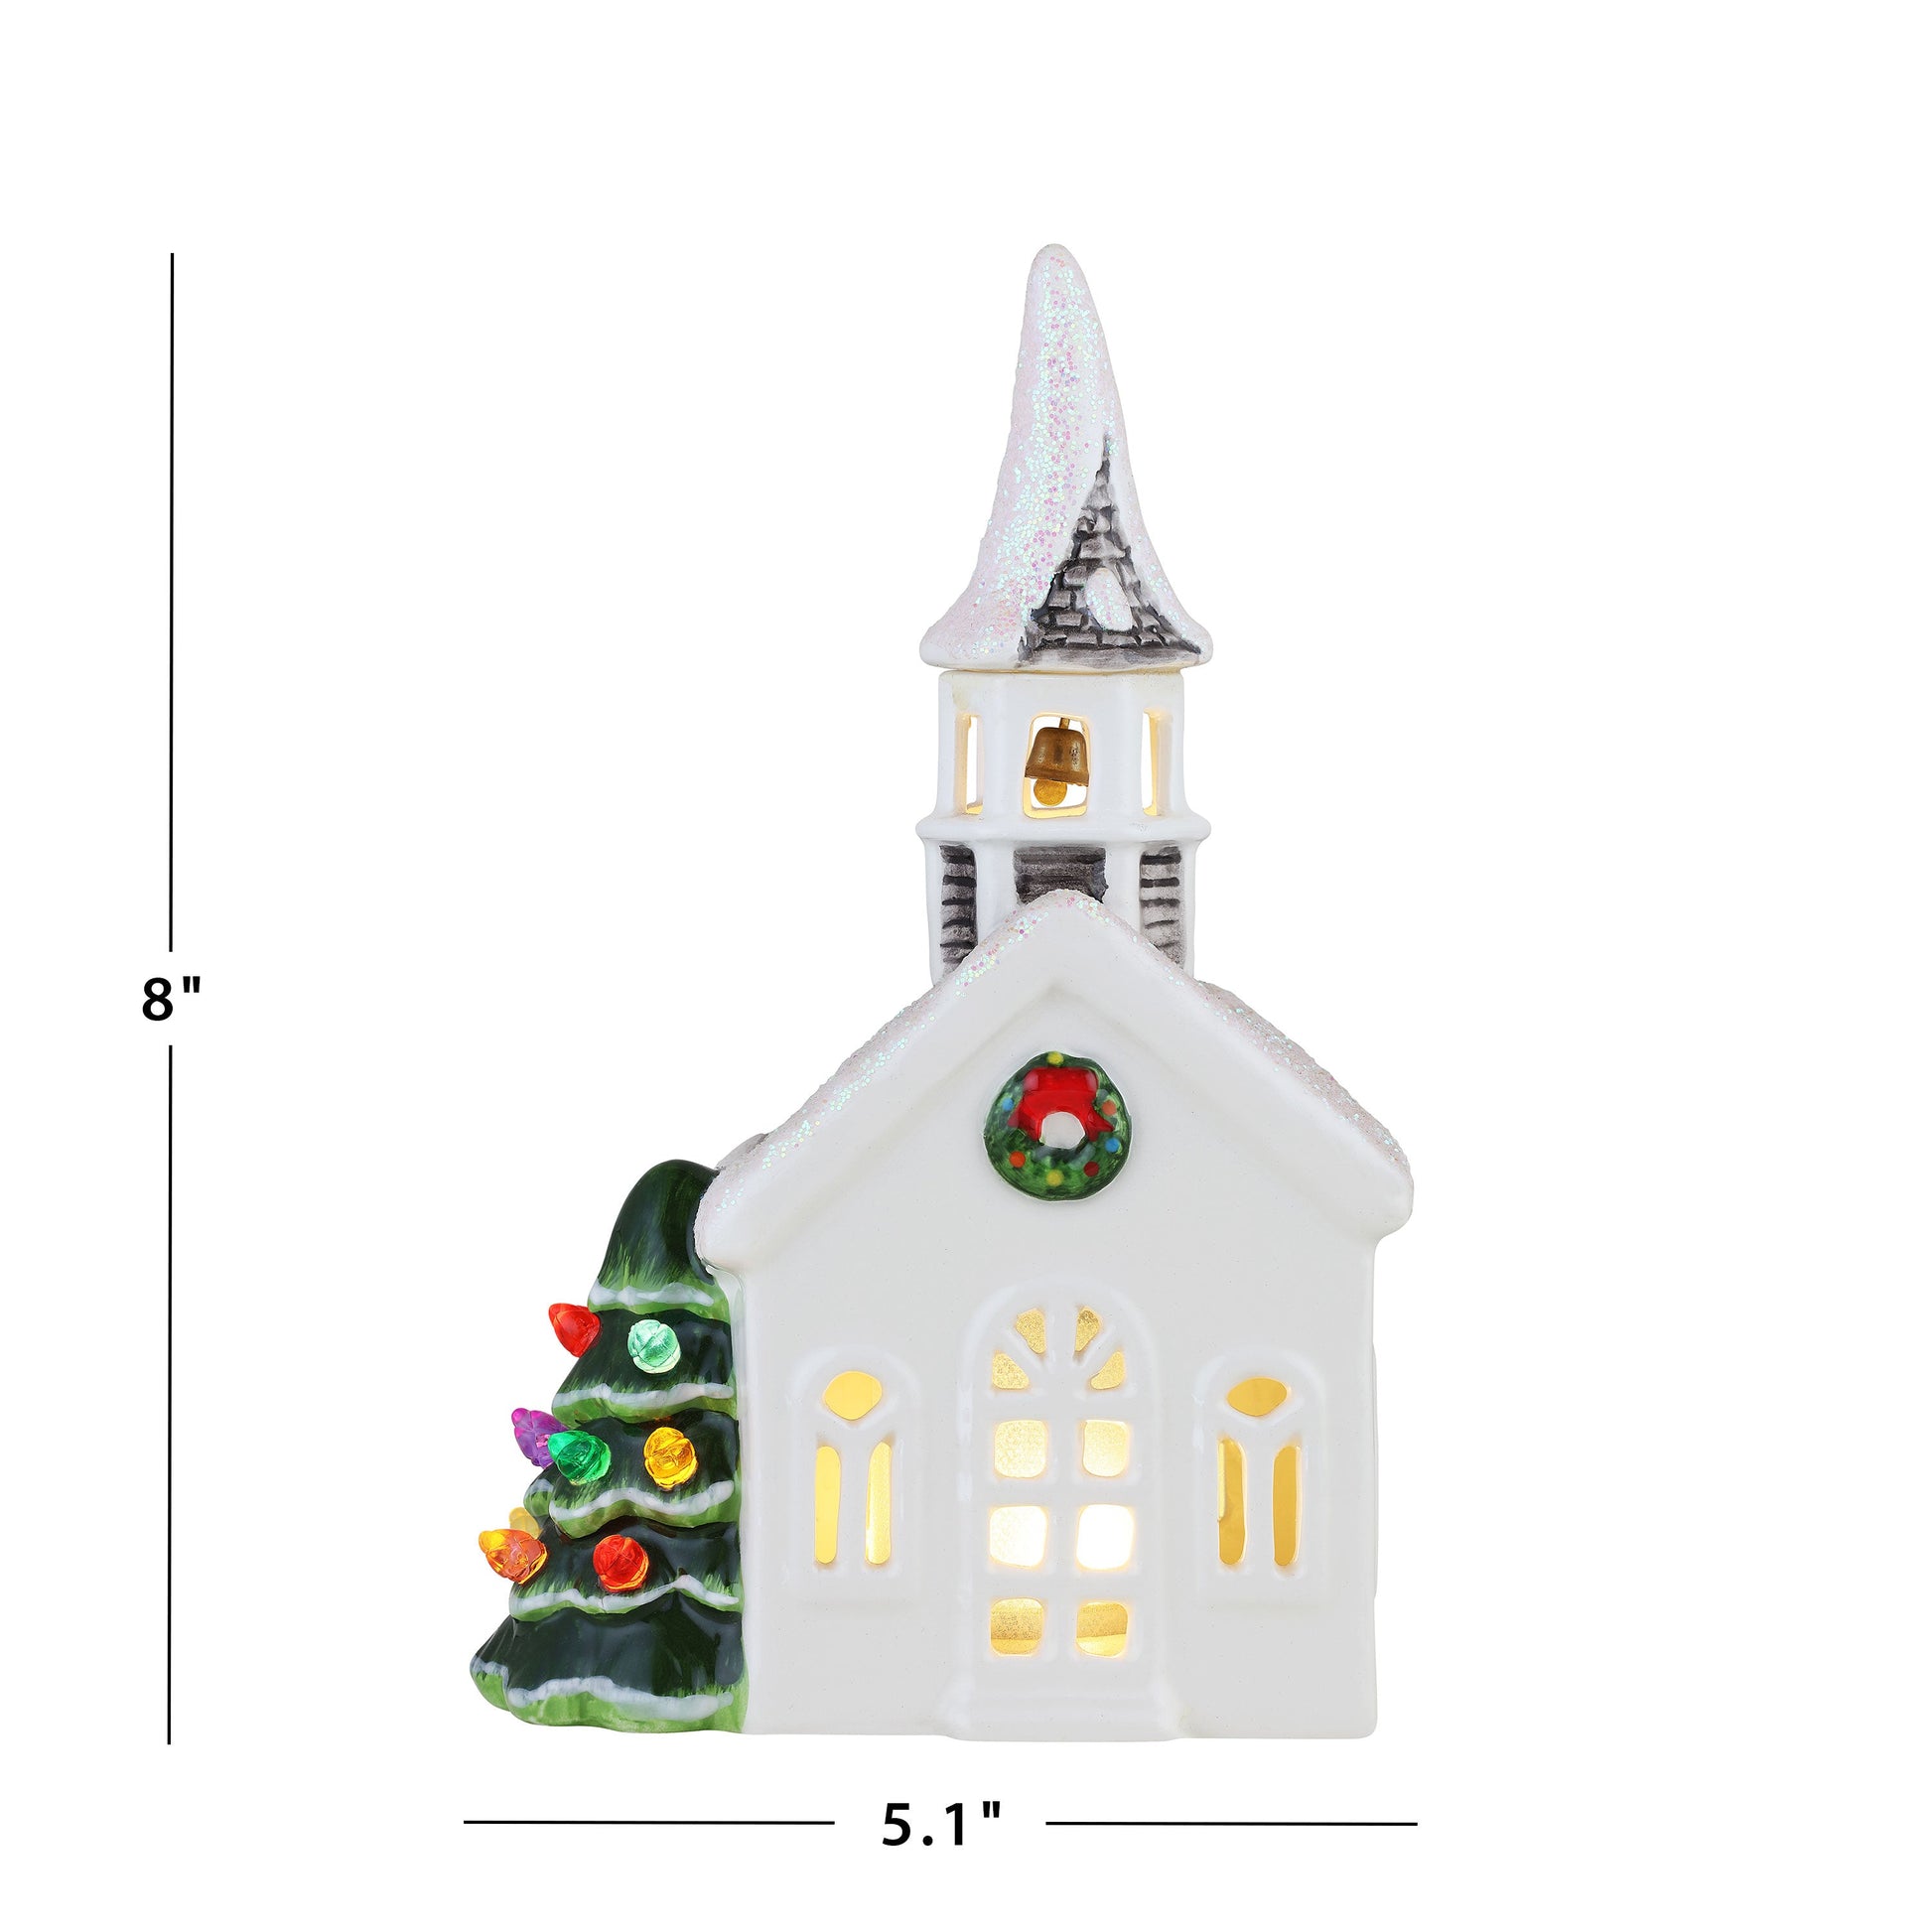 8" Nostalgic Ceramic Village Church - Mr. Christmas